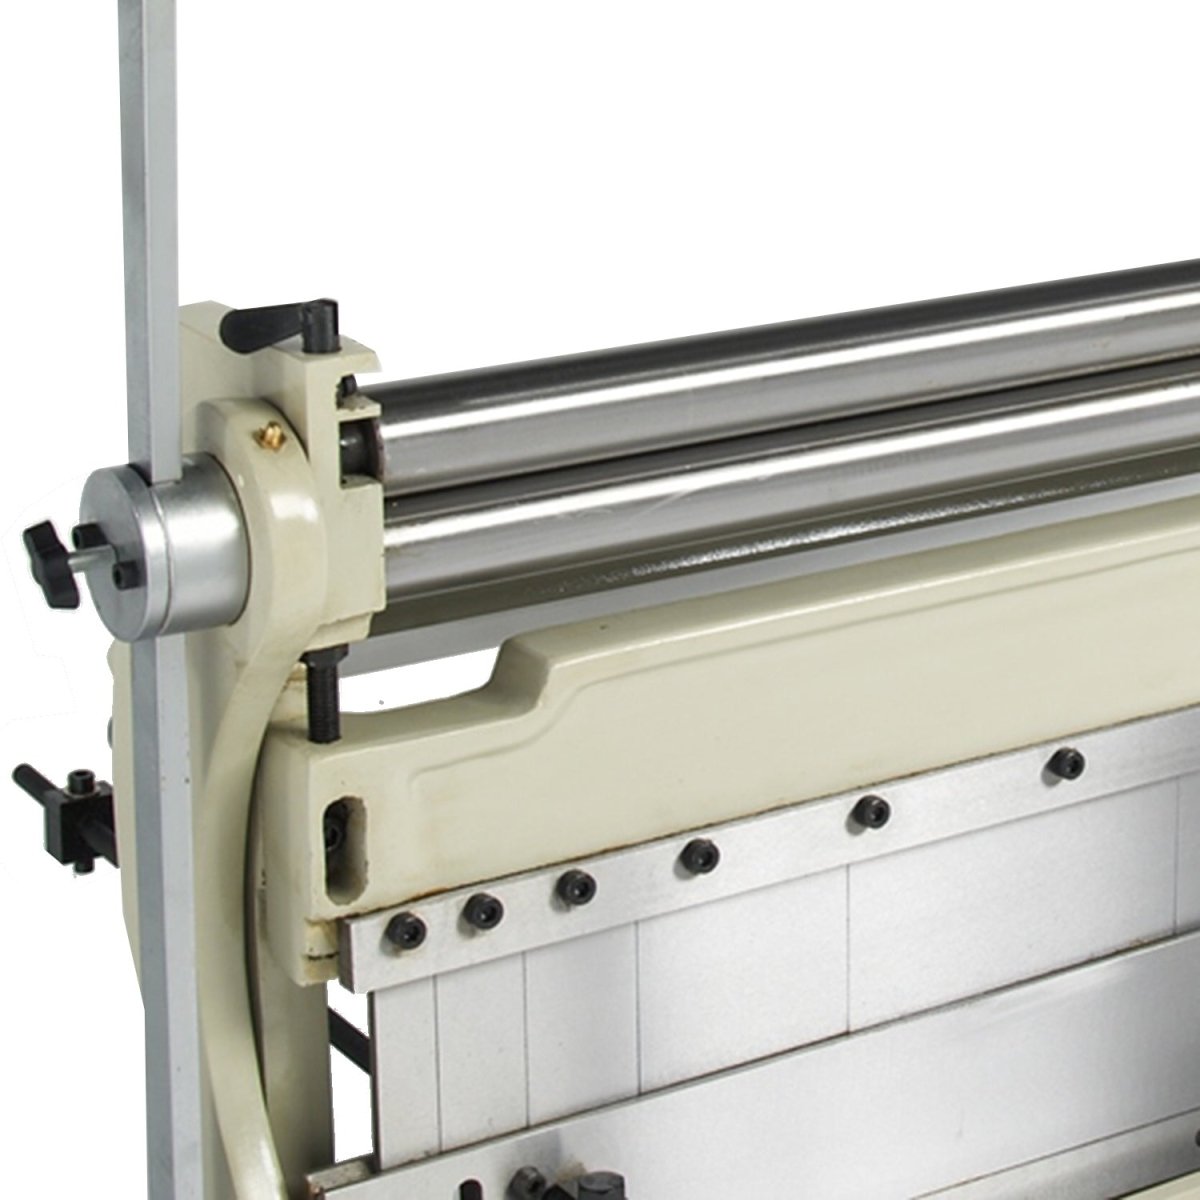 3-In-1 Shear Brake Roll Machine Sbr-4020 - Diamond Tool Store